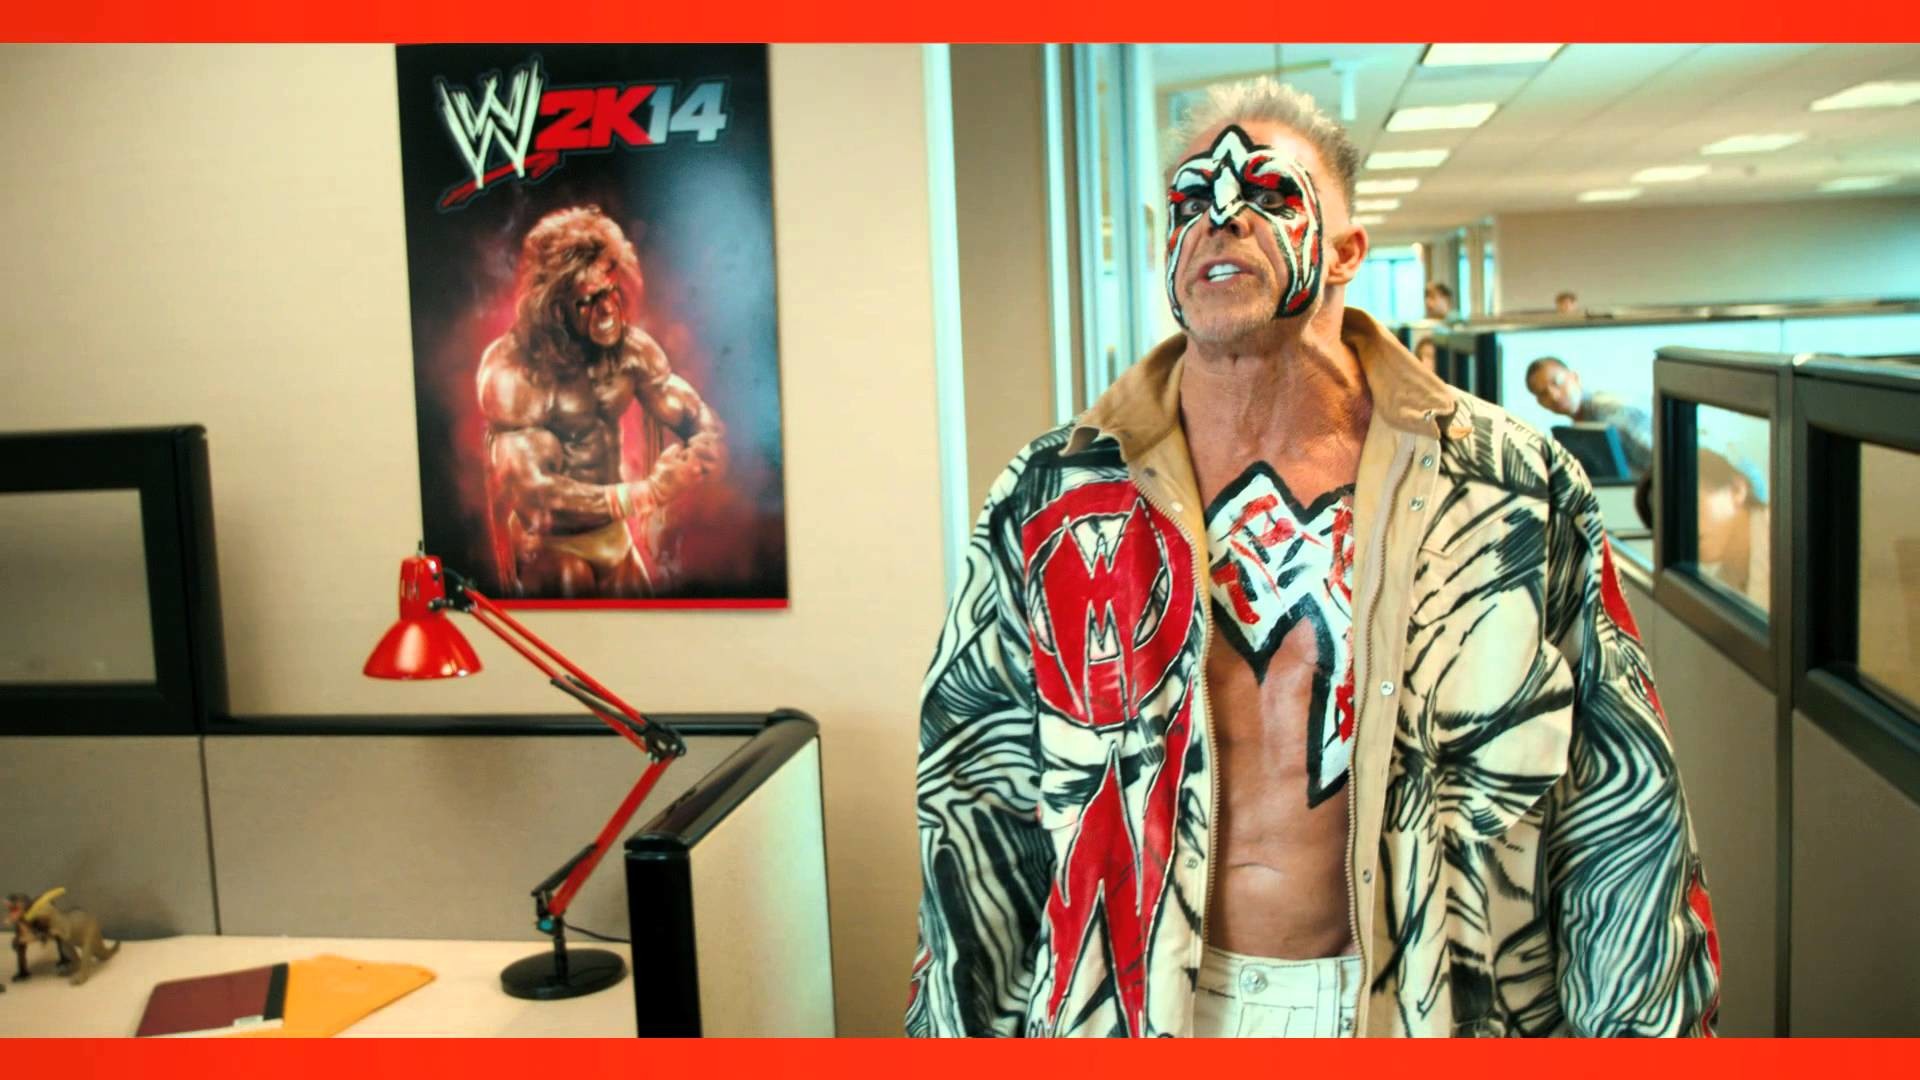 1920x1080 Ultimate Warrior returns as the WWE 2K14 pre-order bonus (Official) -  YouTube